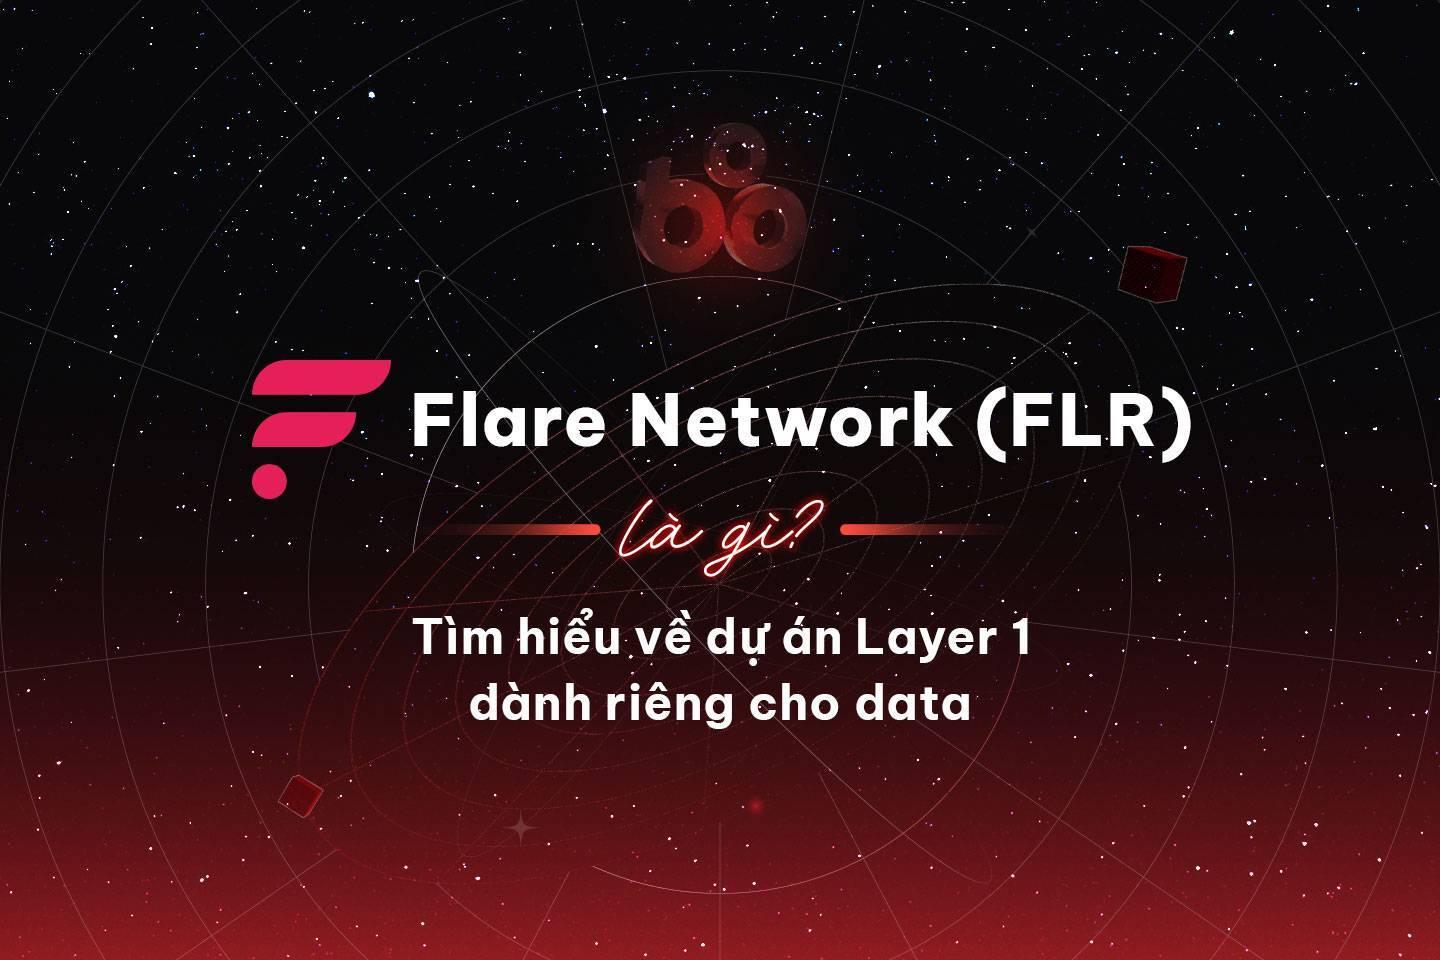 flare-network-flr-la-gi-tim-hieu-ve-du-an-layer-1-danh-rieng-cho-data